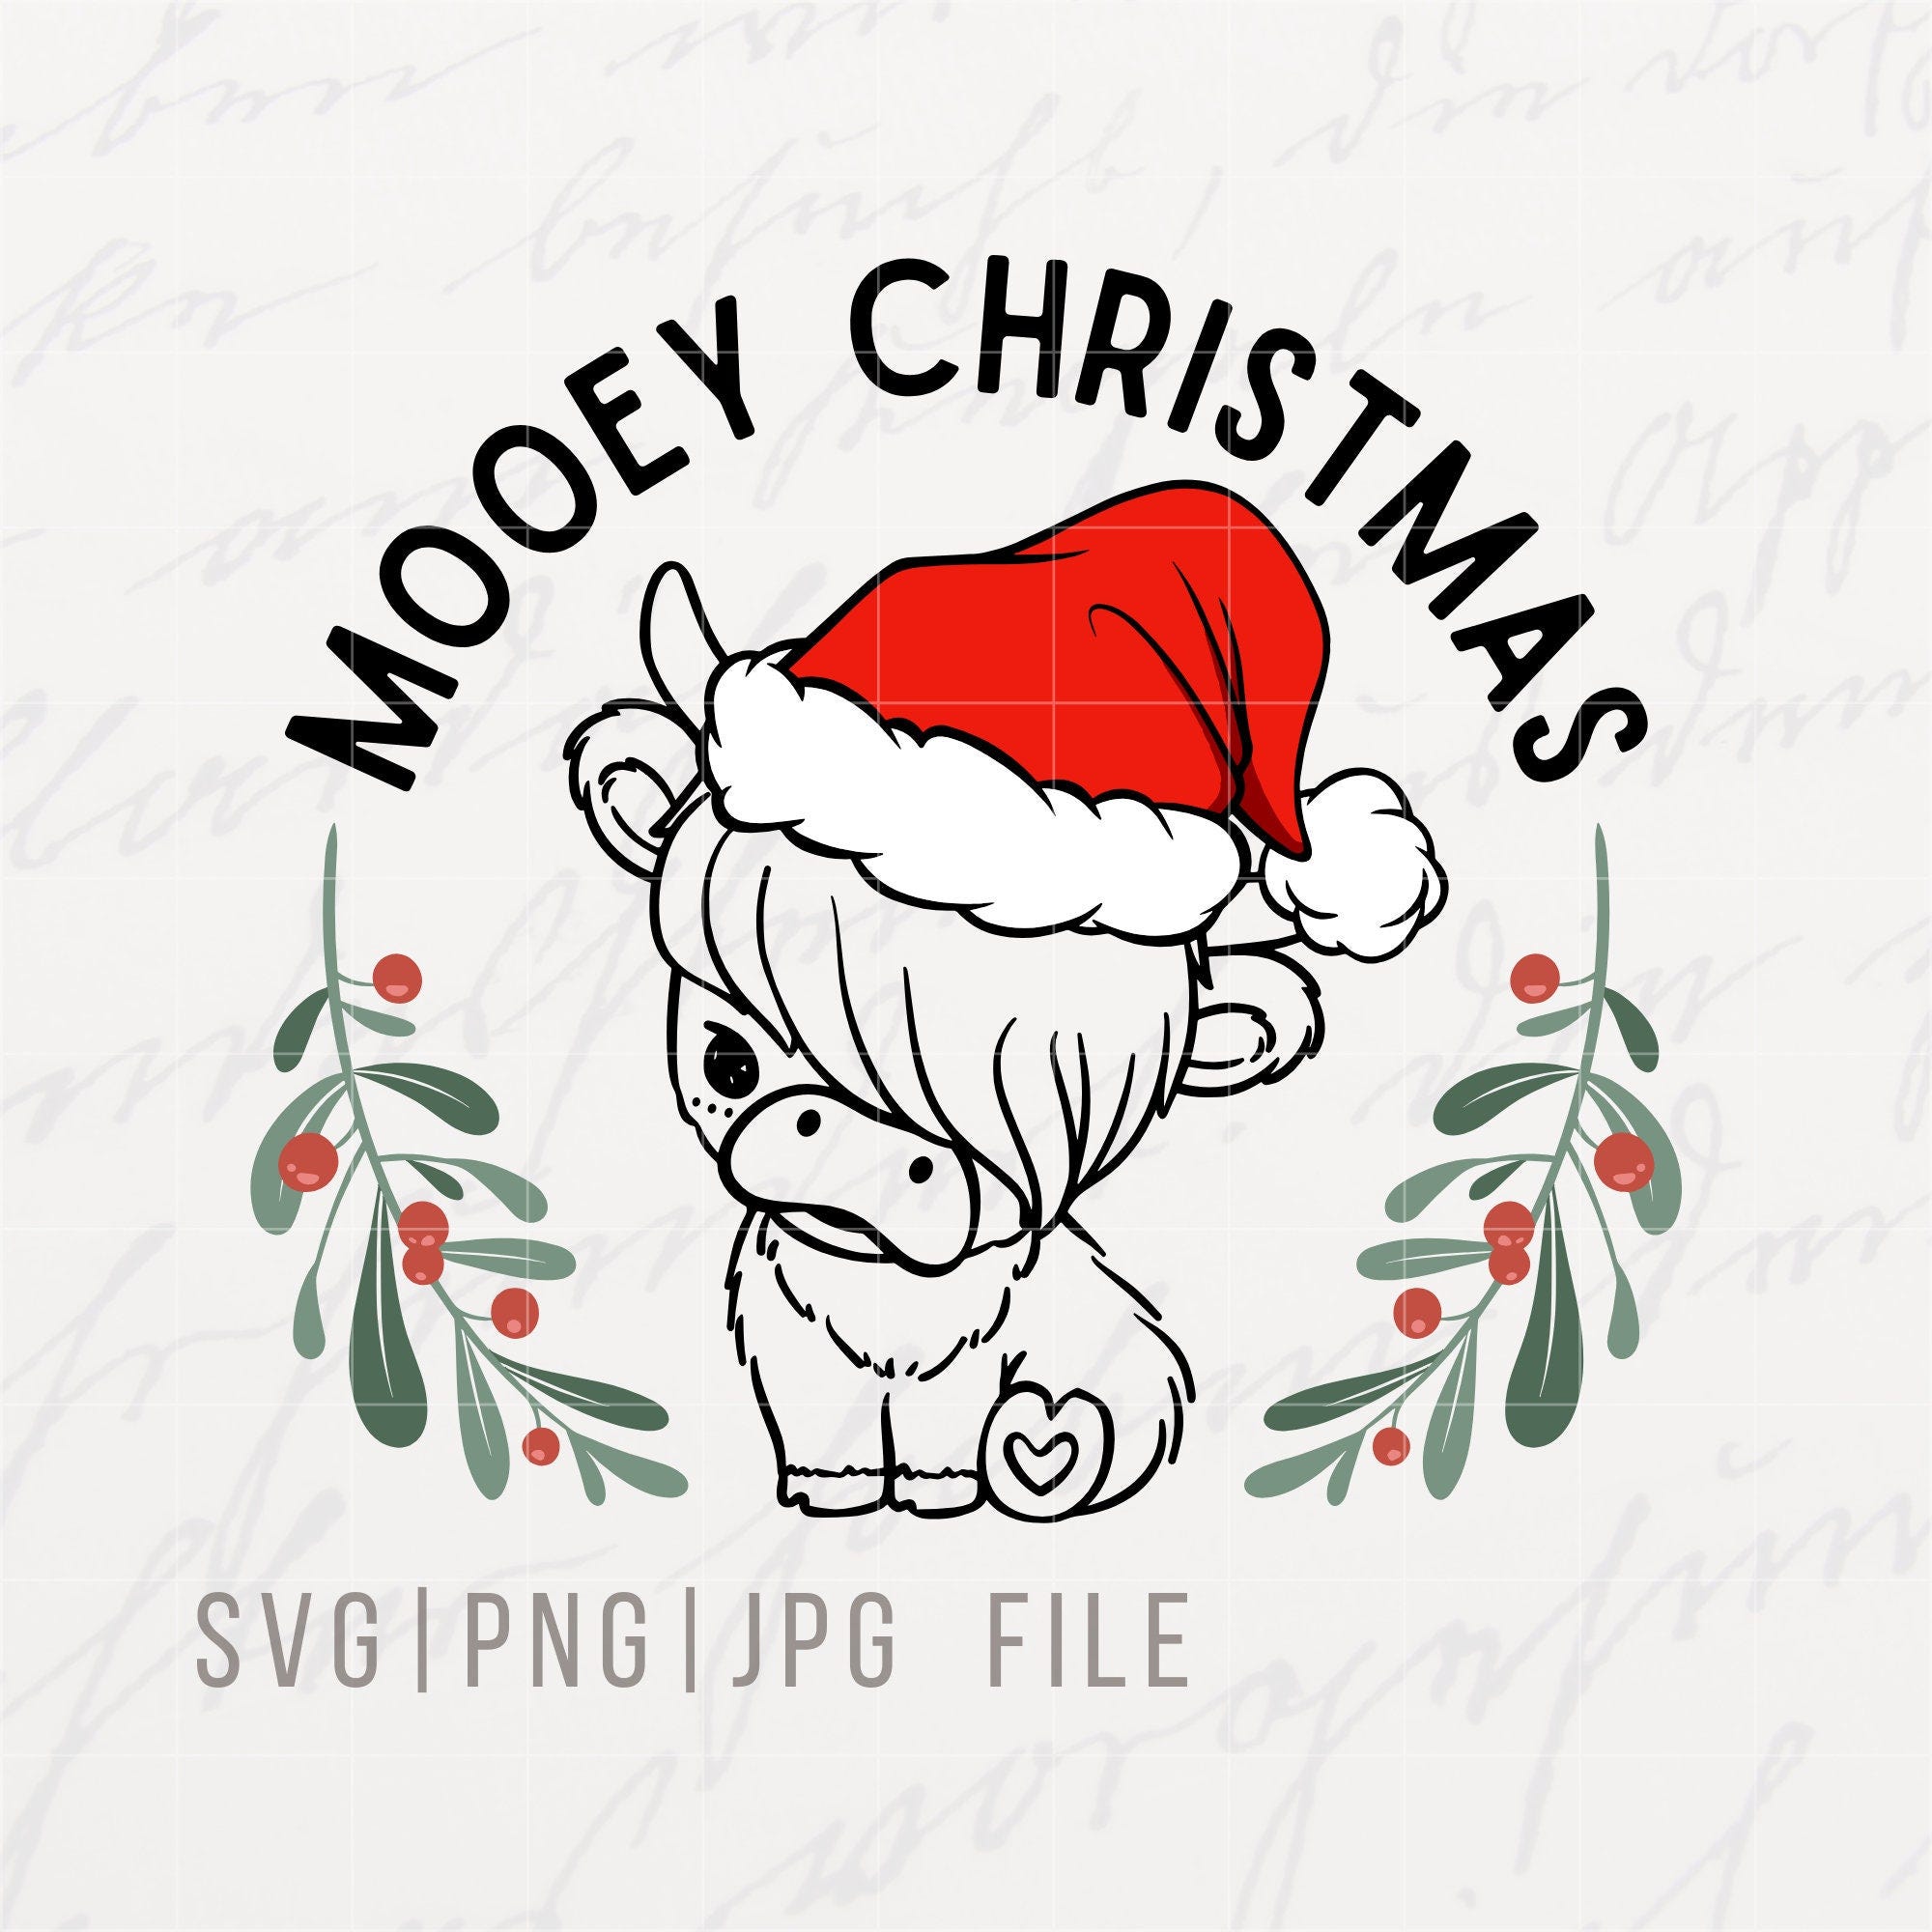 Mooey Christmas svg, Christmas Cow Svg, Christmas Design, Cow with Santa Hat Svg, Instant Download